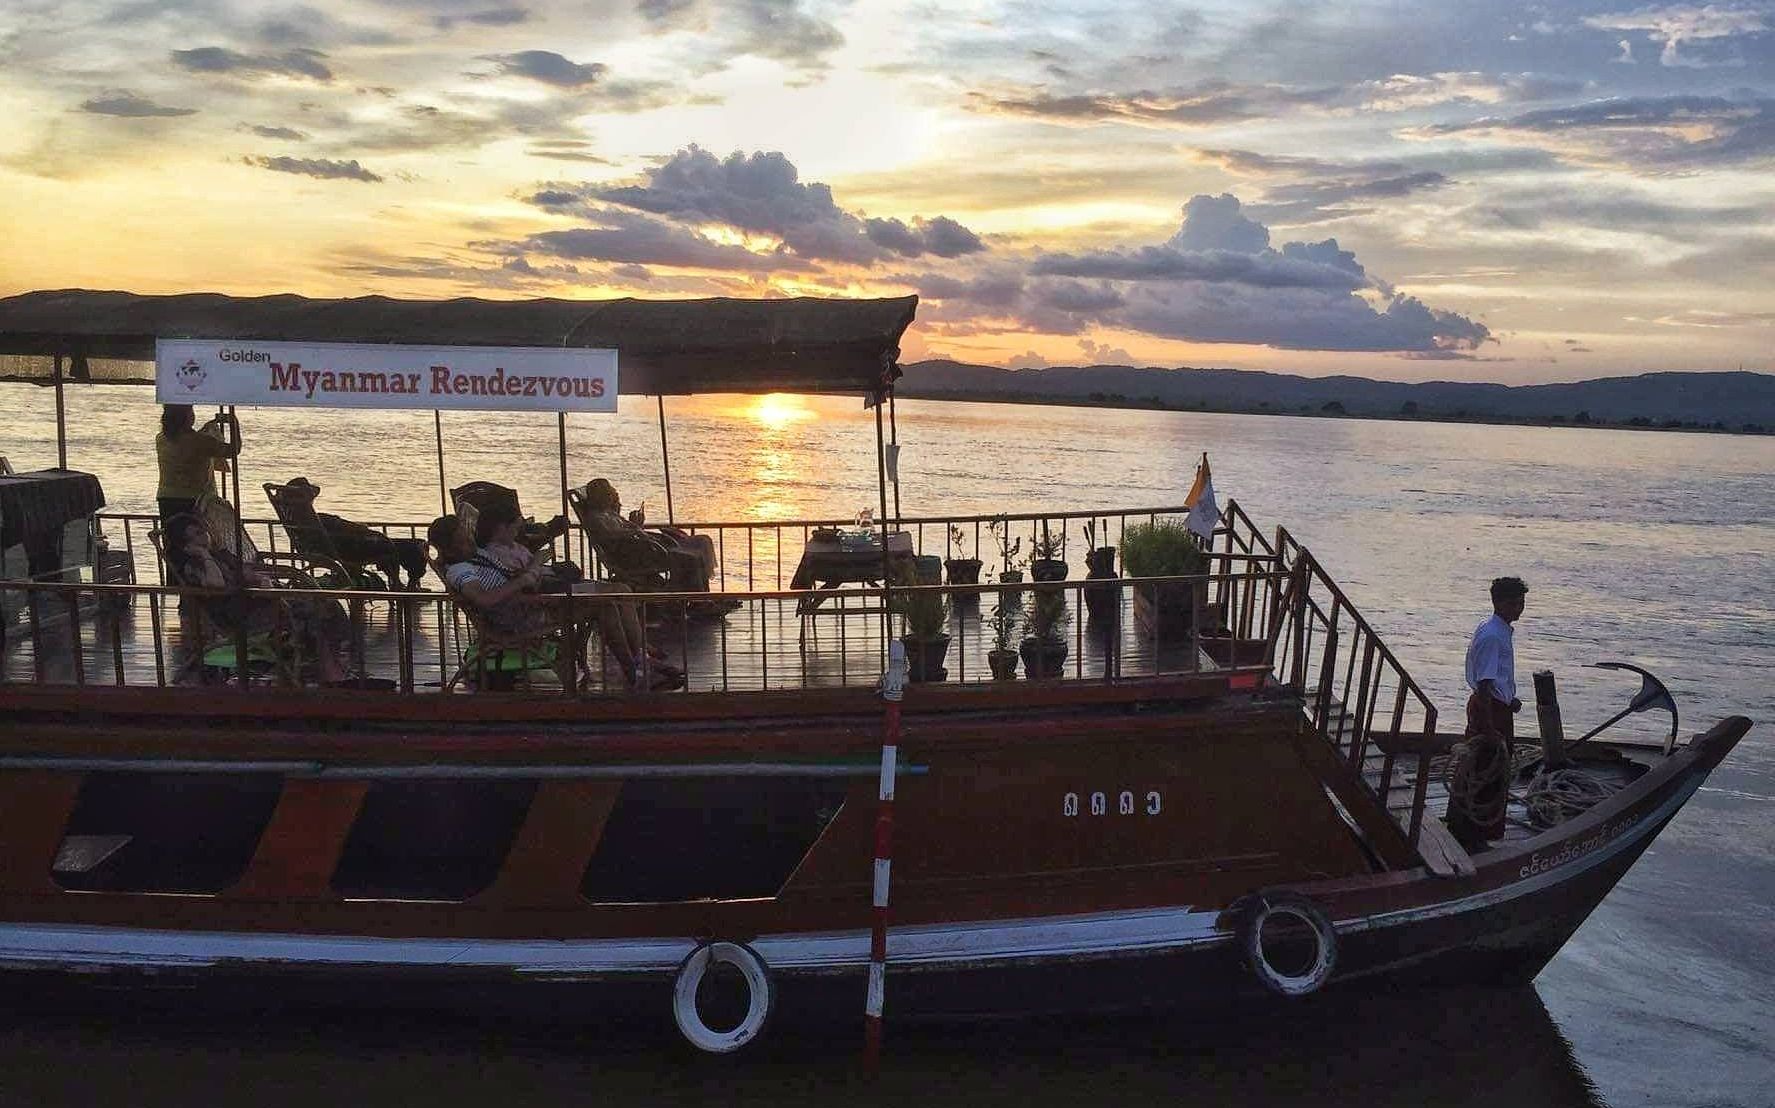 Sunset on Irrawaddy River at Mandalay in northern Myanmar / Burma